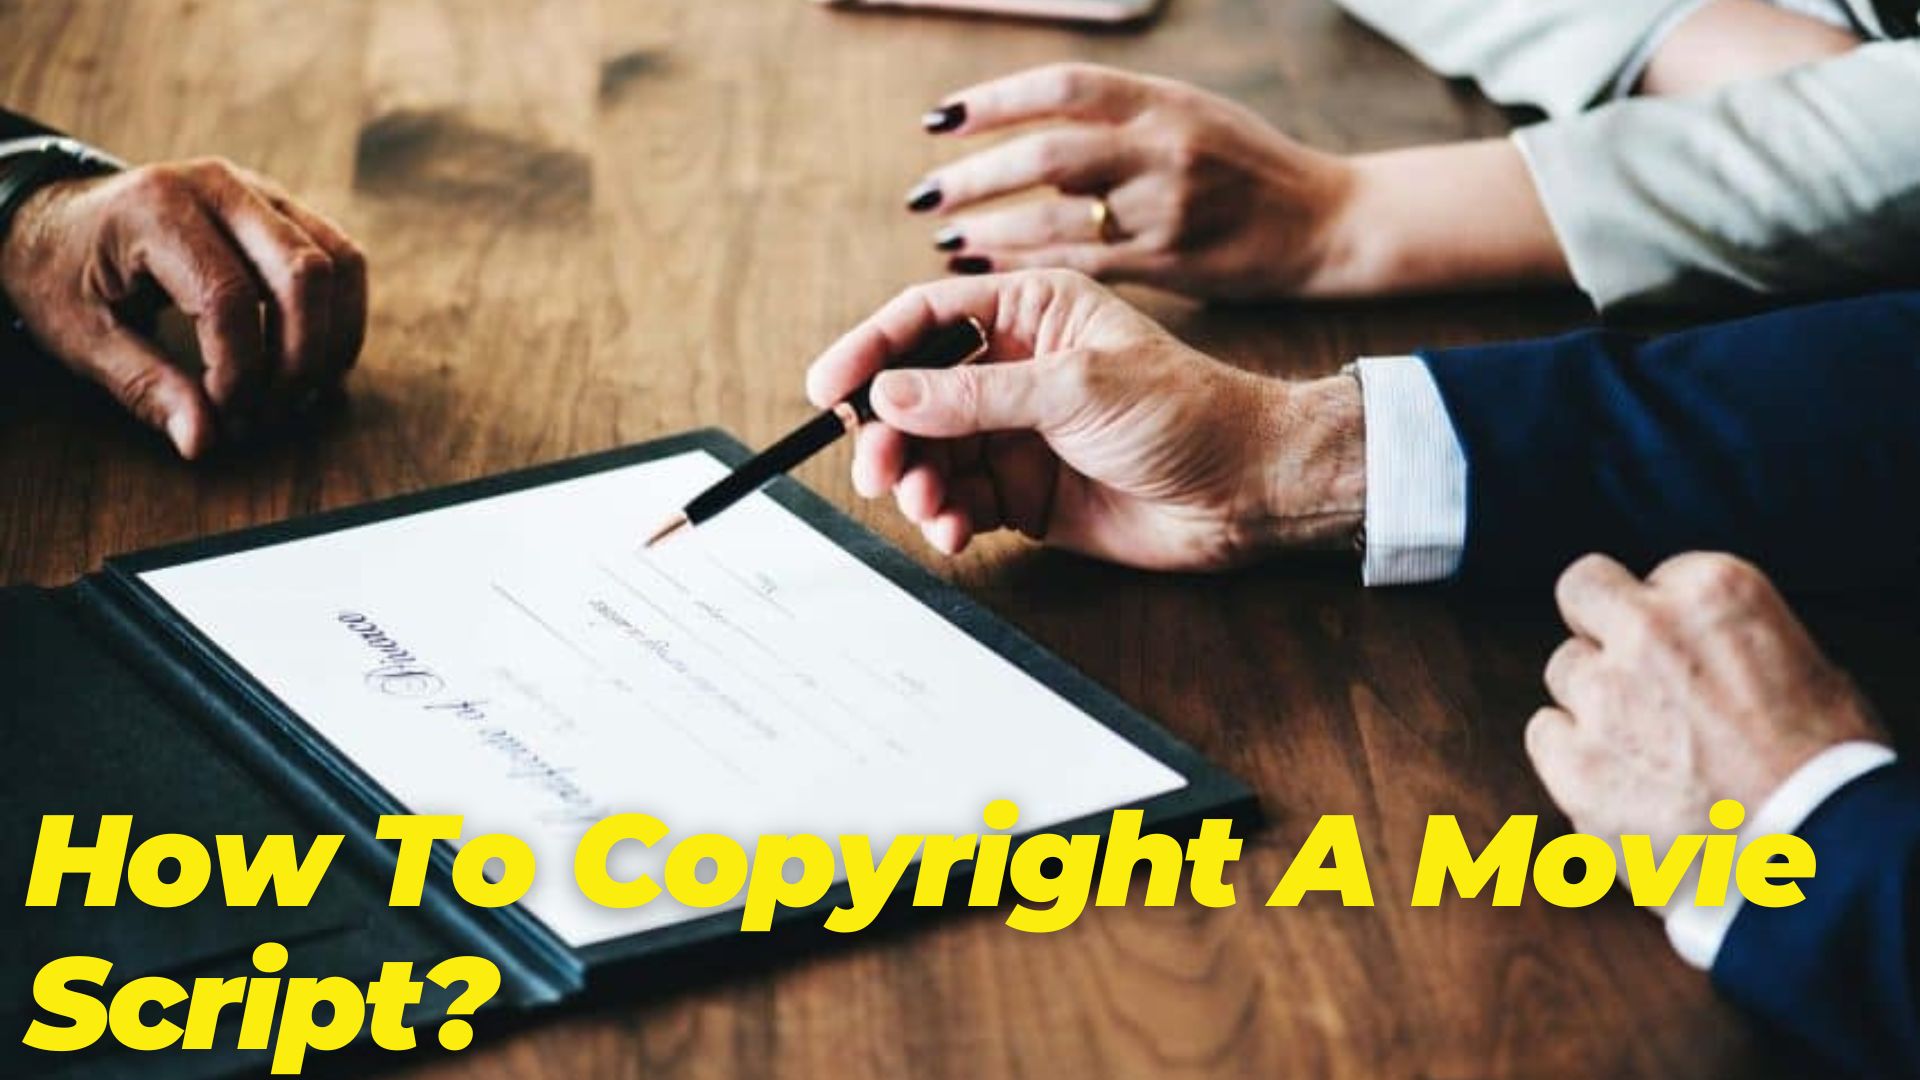 How To Copyright A Movie Script?